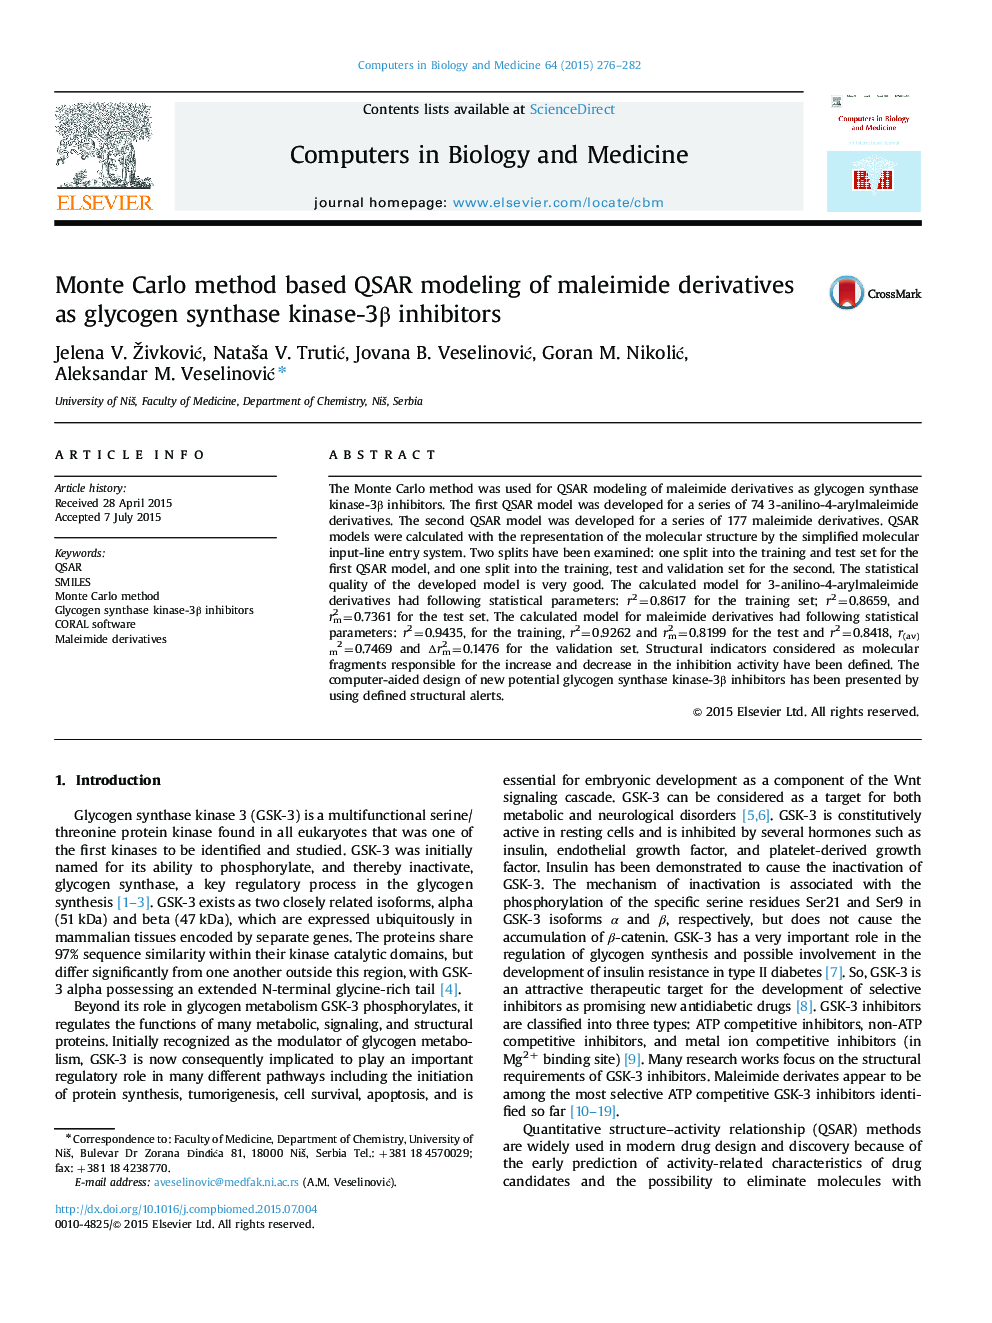 Monte Carlo method based QSAR modeling of maleimide derivatives as glycogen synthase kinase-3β inhibitors